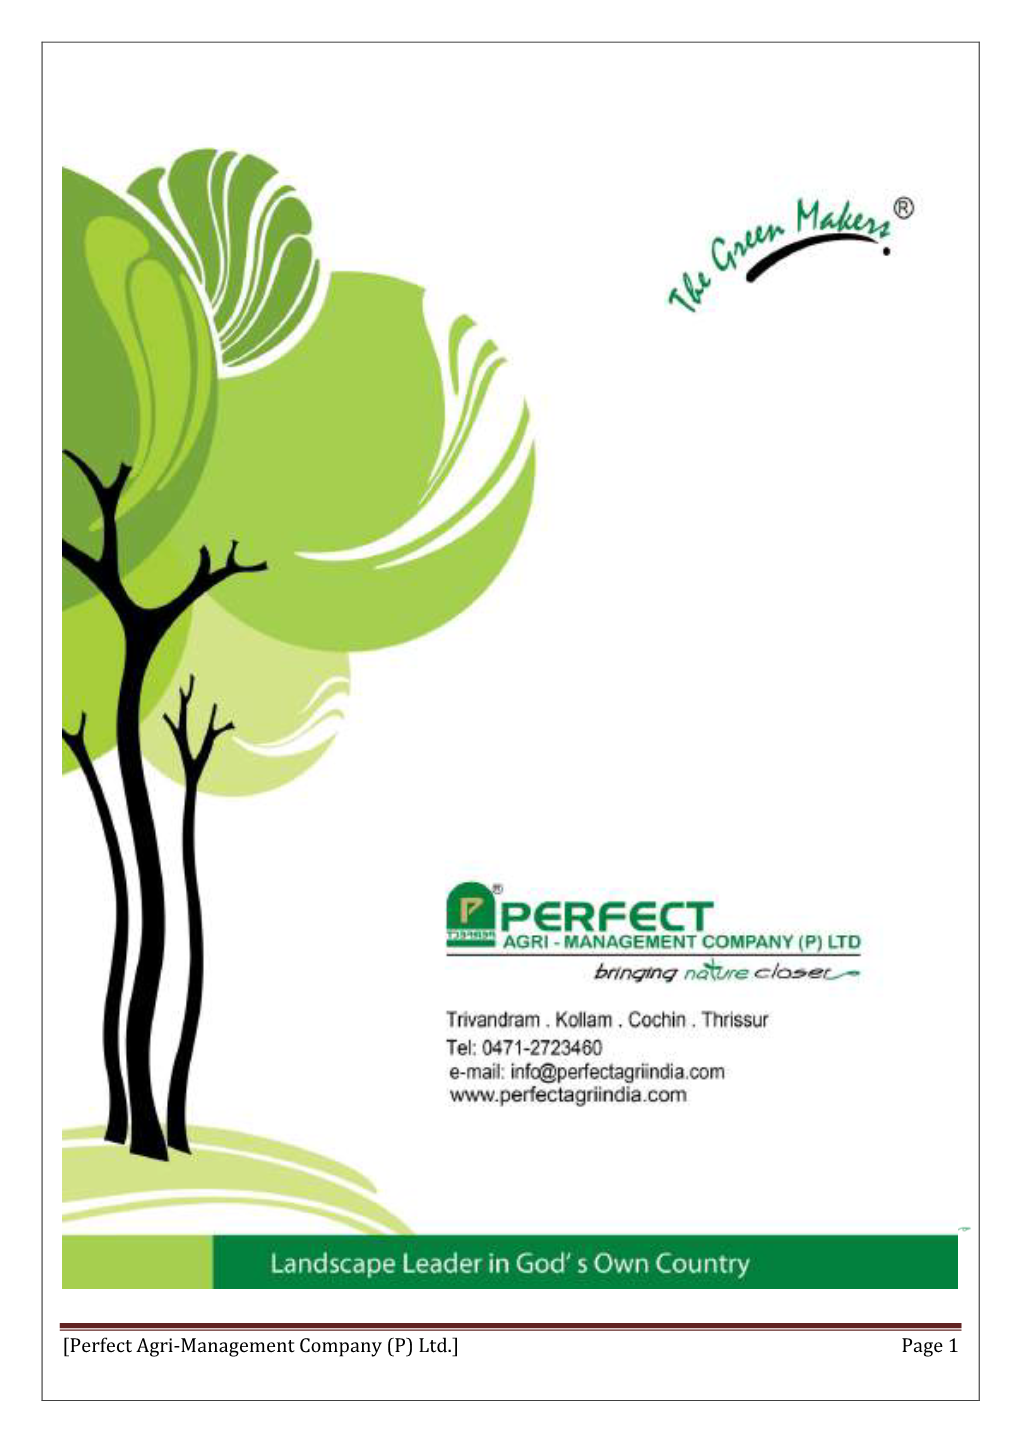 About Us: Perfect Agri-Management Company (P) Ltd